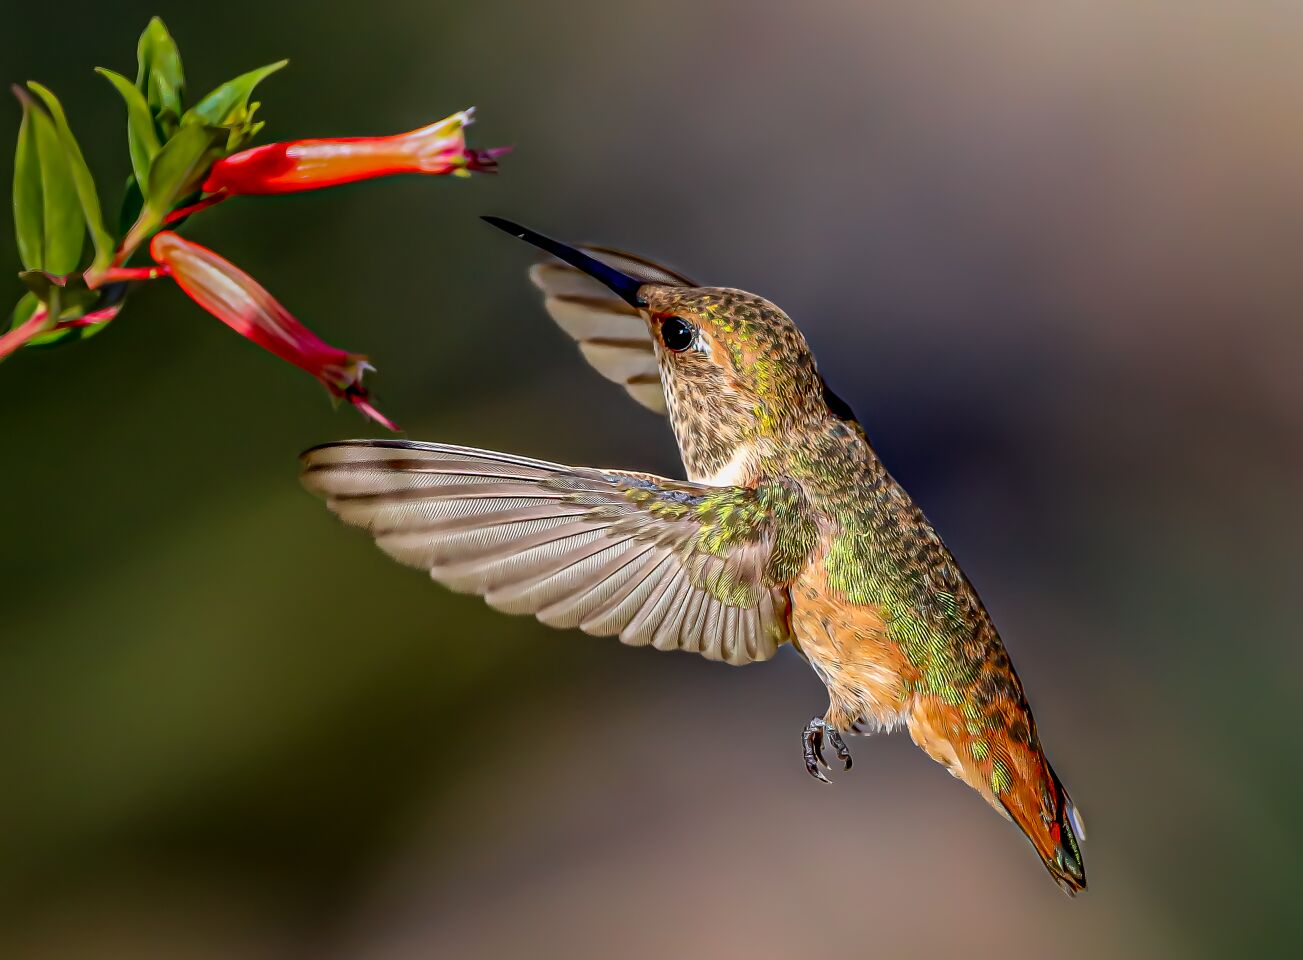 Bill McIntire shared five photos he took of birds in his Gatewood Hills neighborhood in Rancho Bernardo. The first is a female Allen's hummingbird visiting a flower.